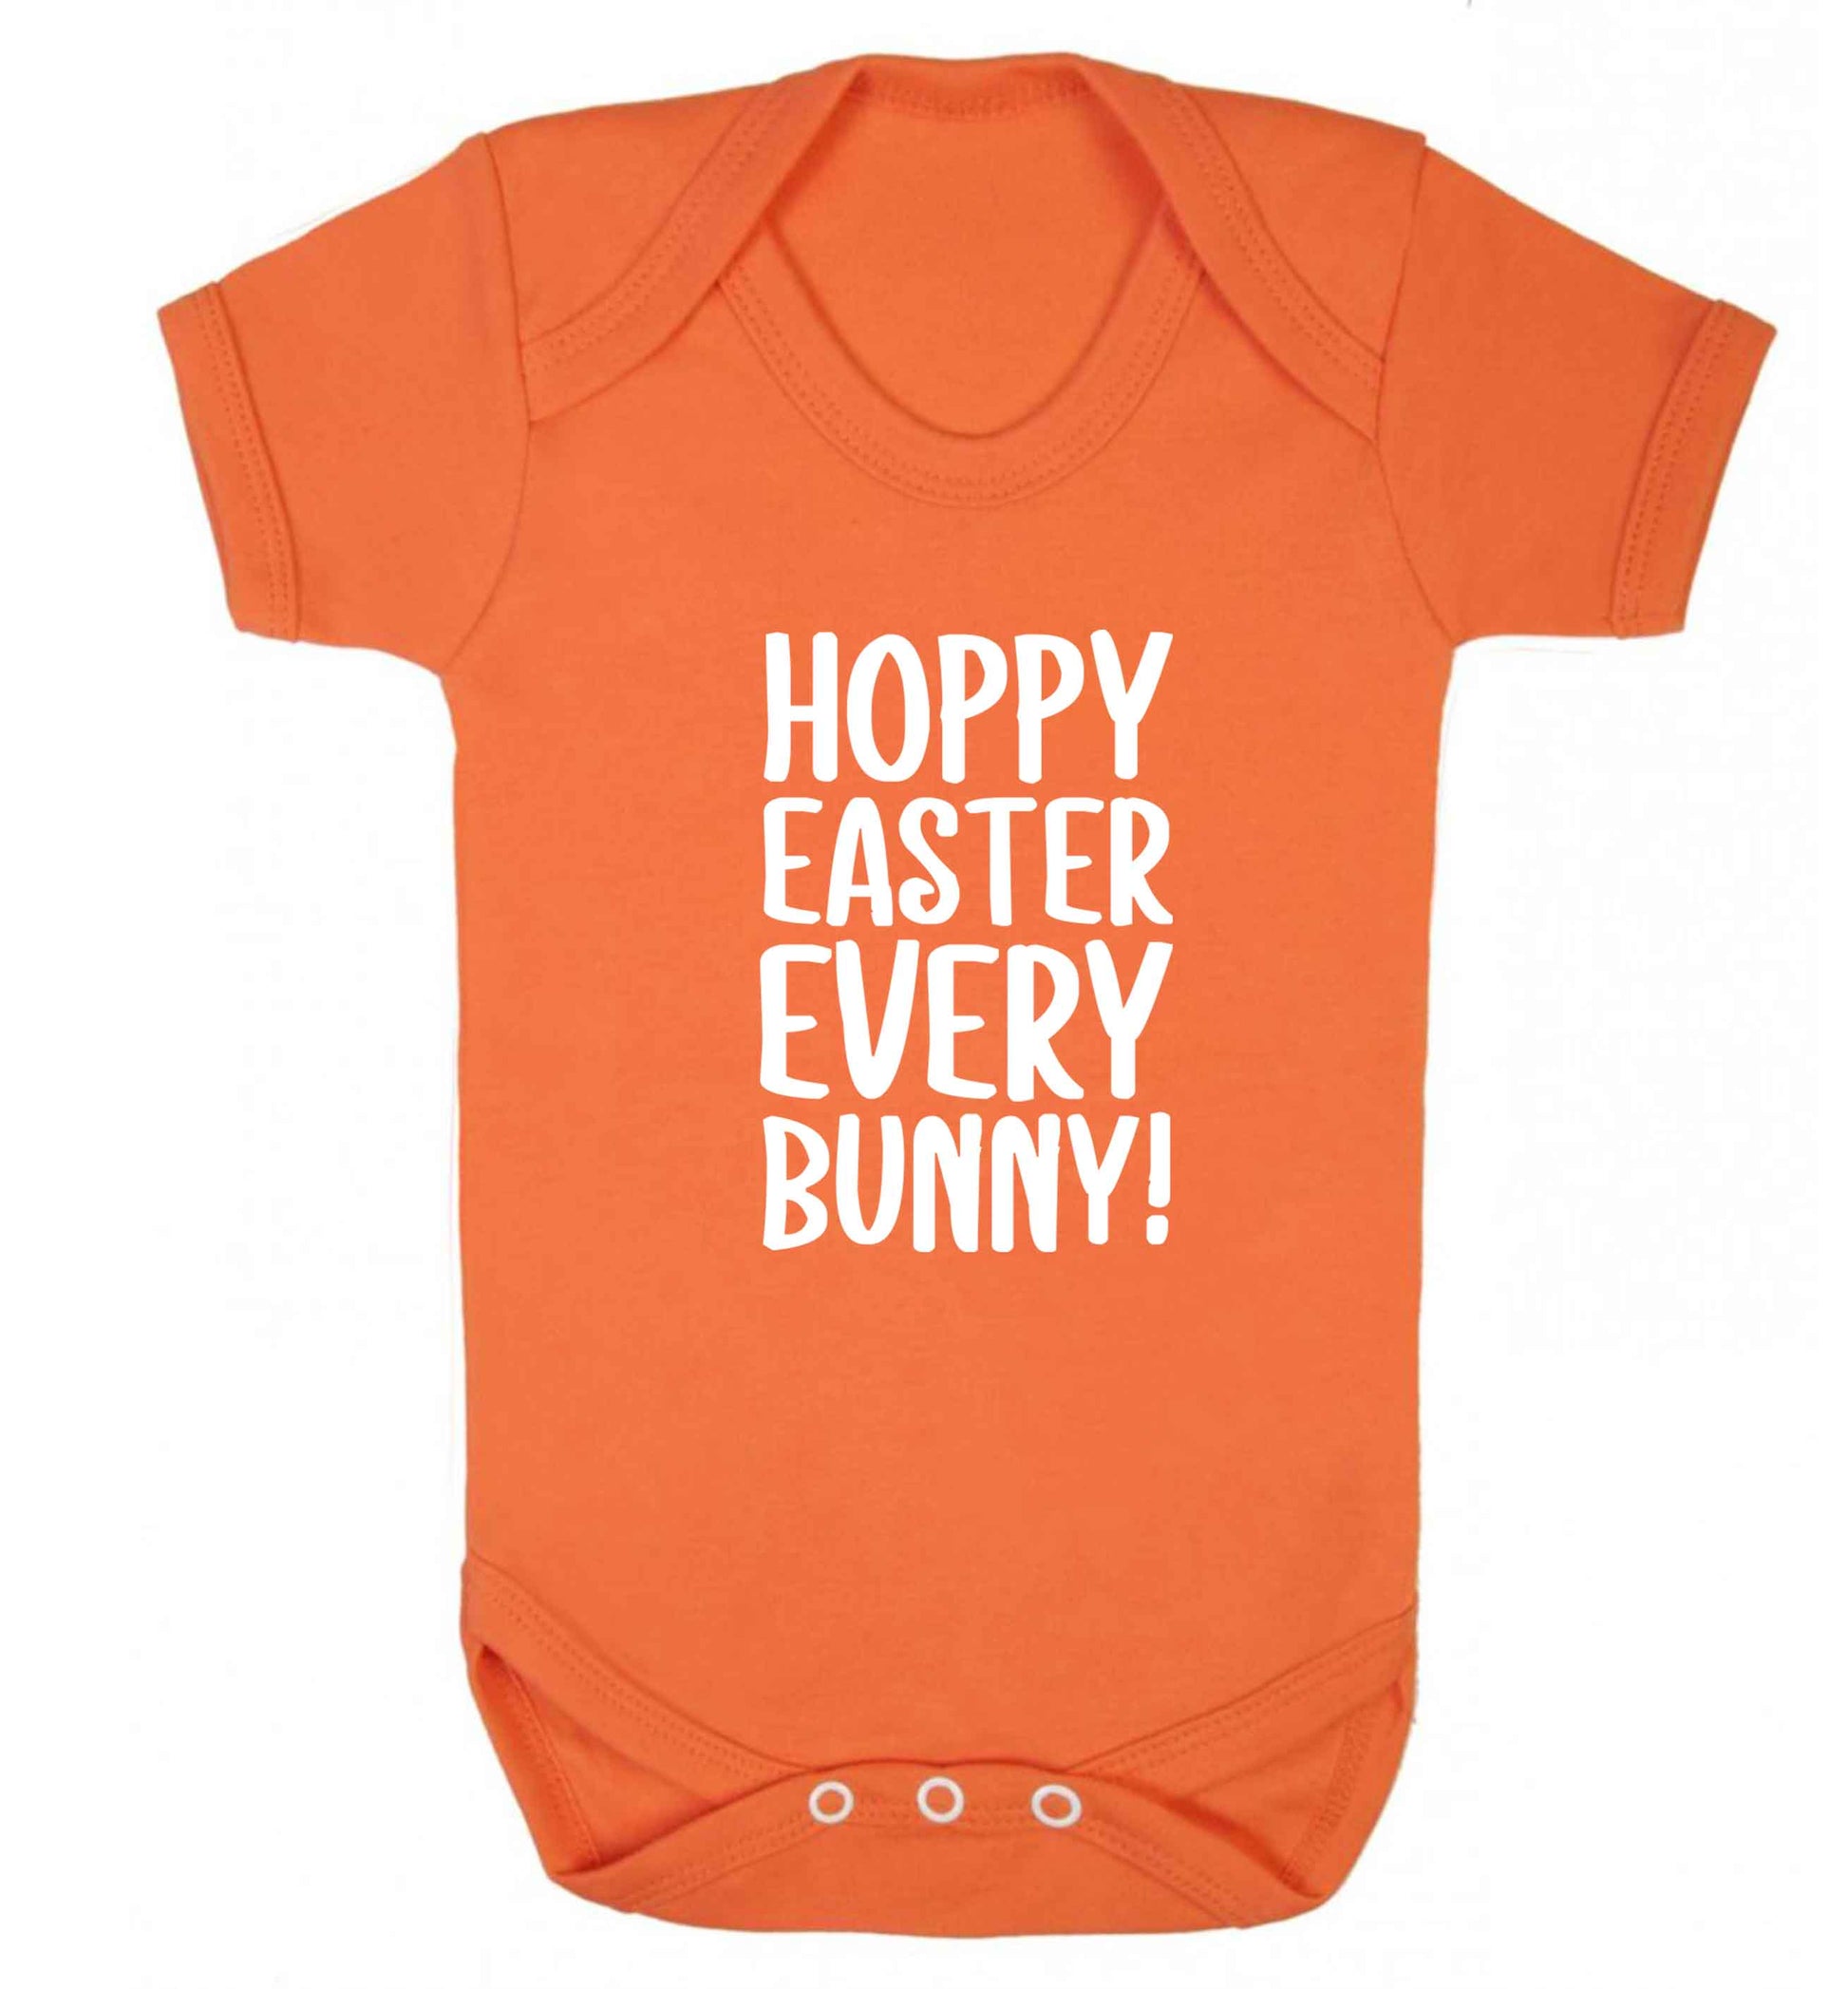 Hoppy Easter every bunny! baby vest orange 18-24 months